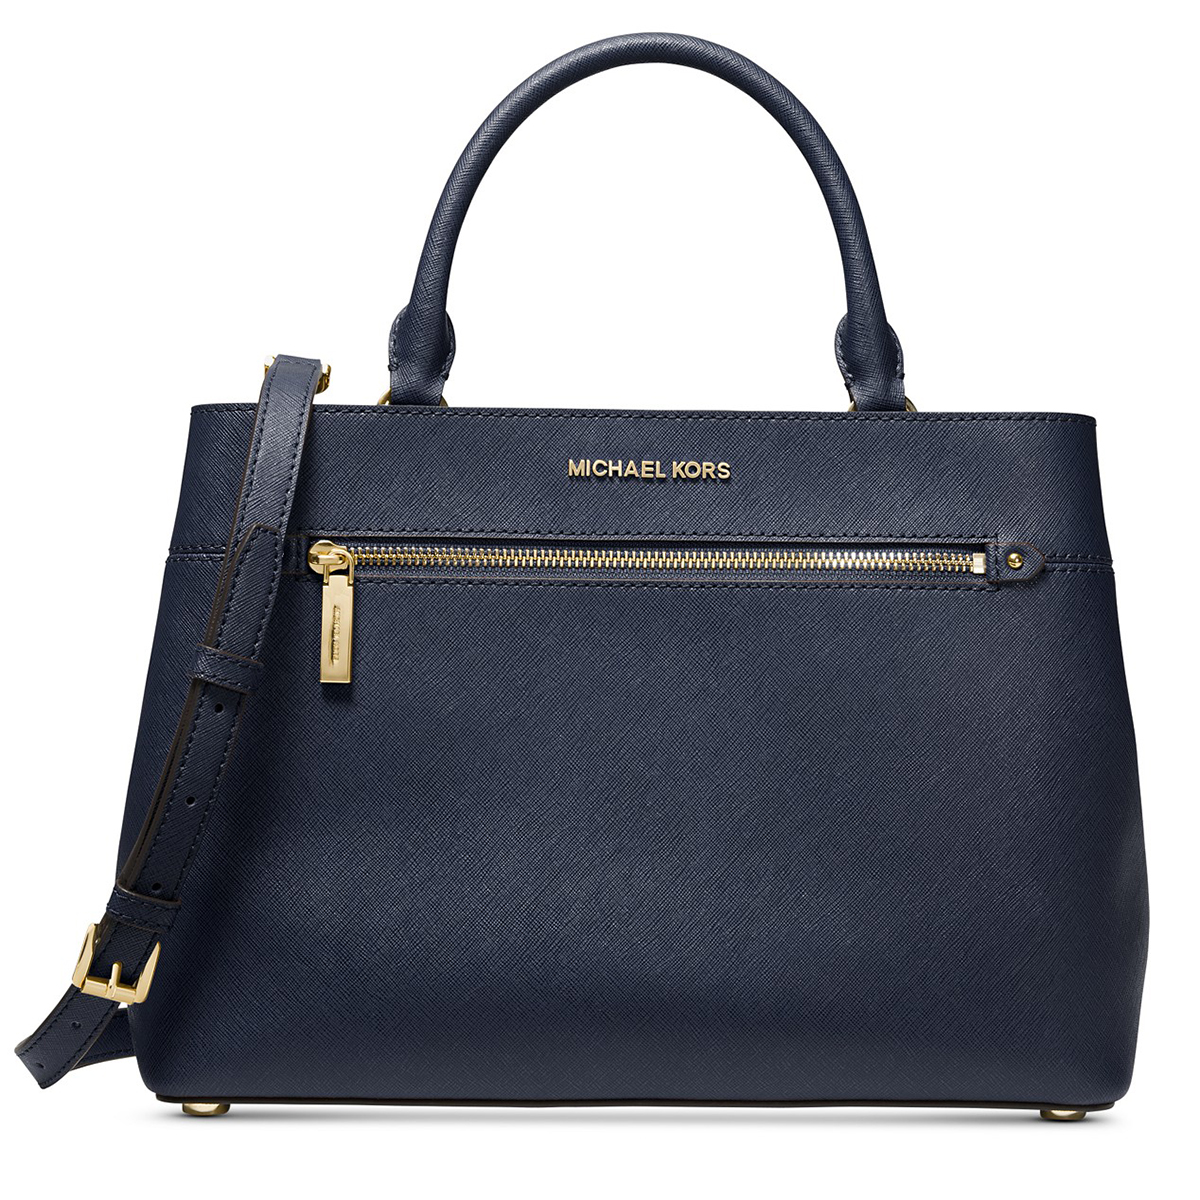 MK handbags on sale discount